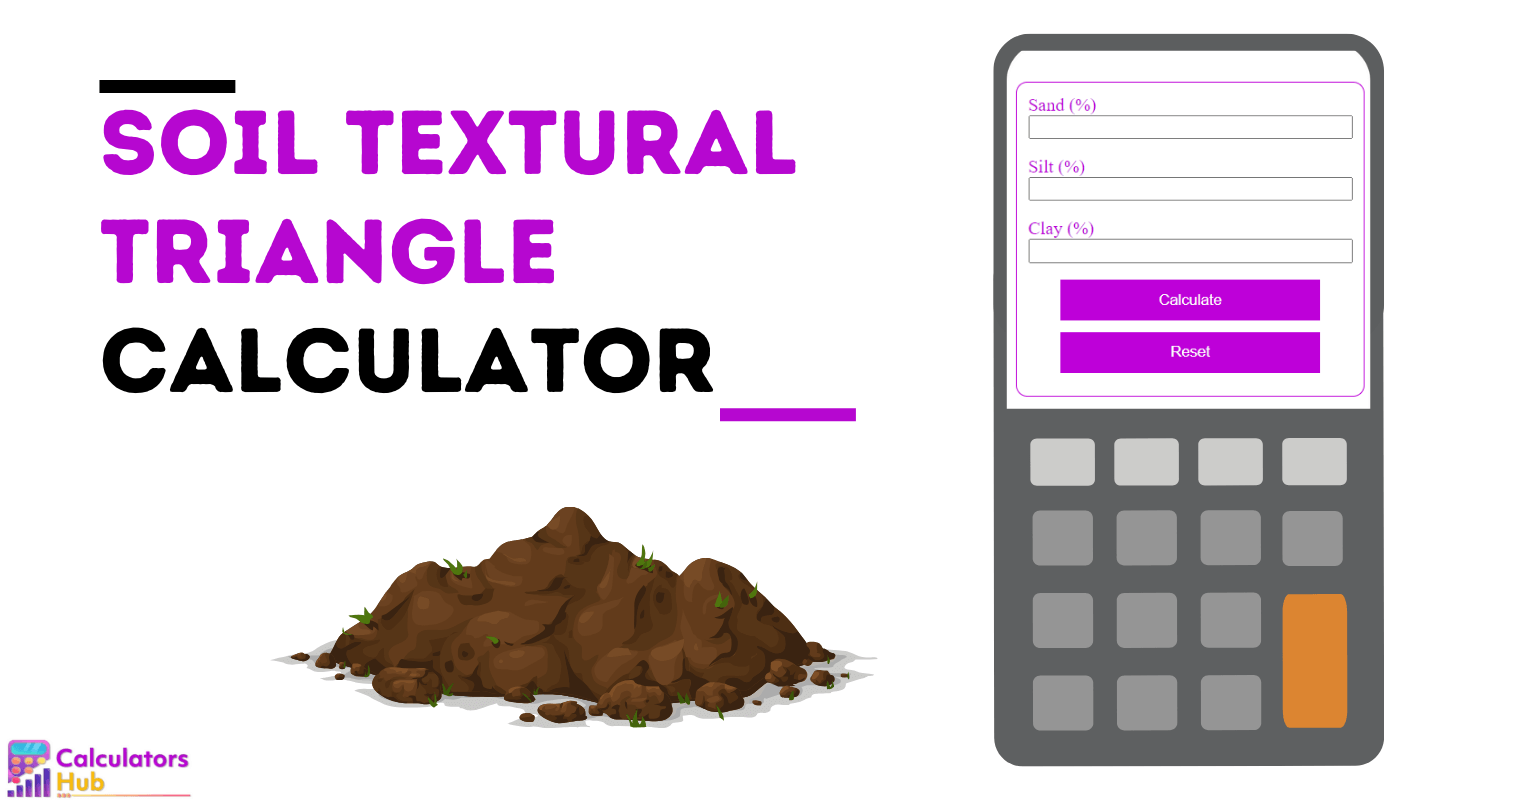 Soil Textural Triangle Calculator